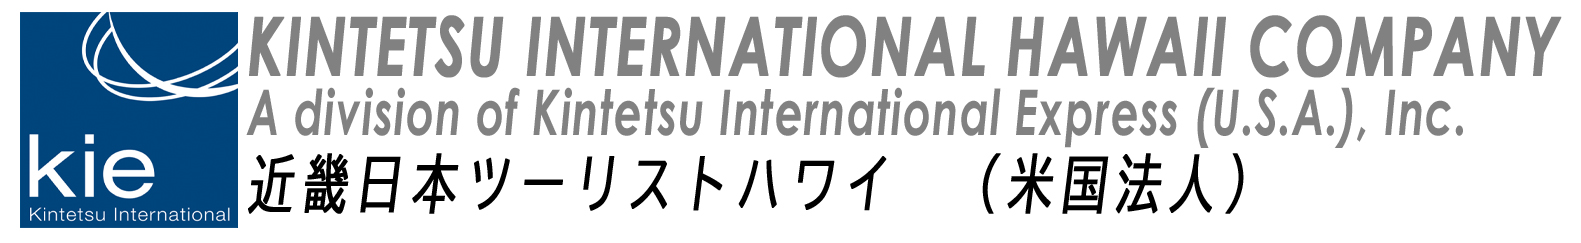 Kintetsu International Hawaii Company Global Services